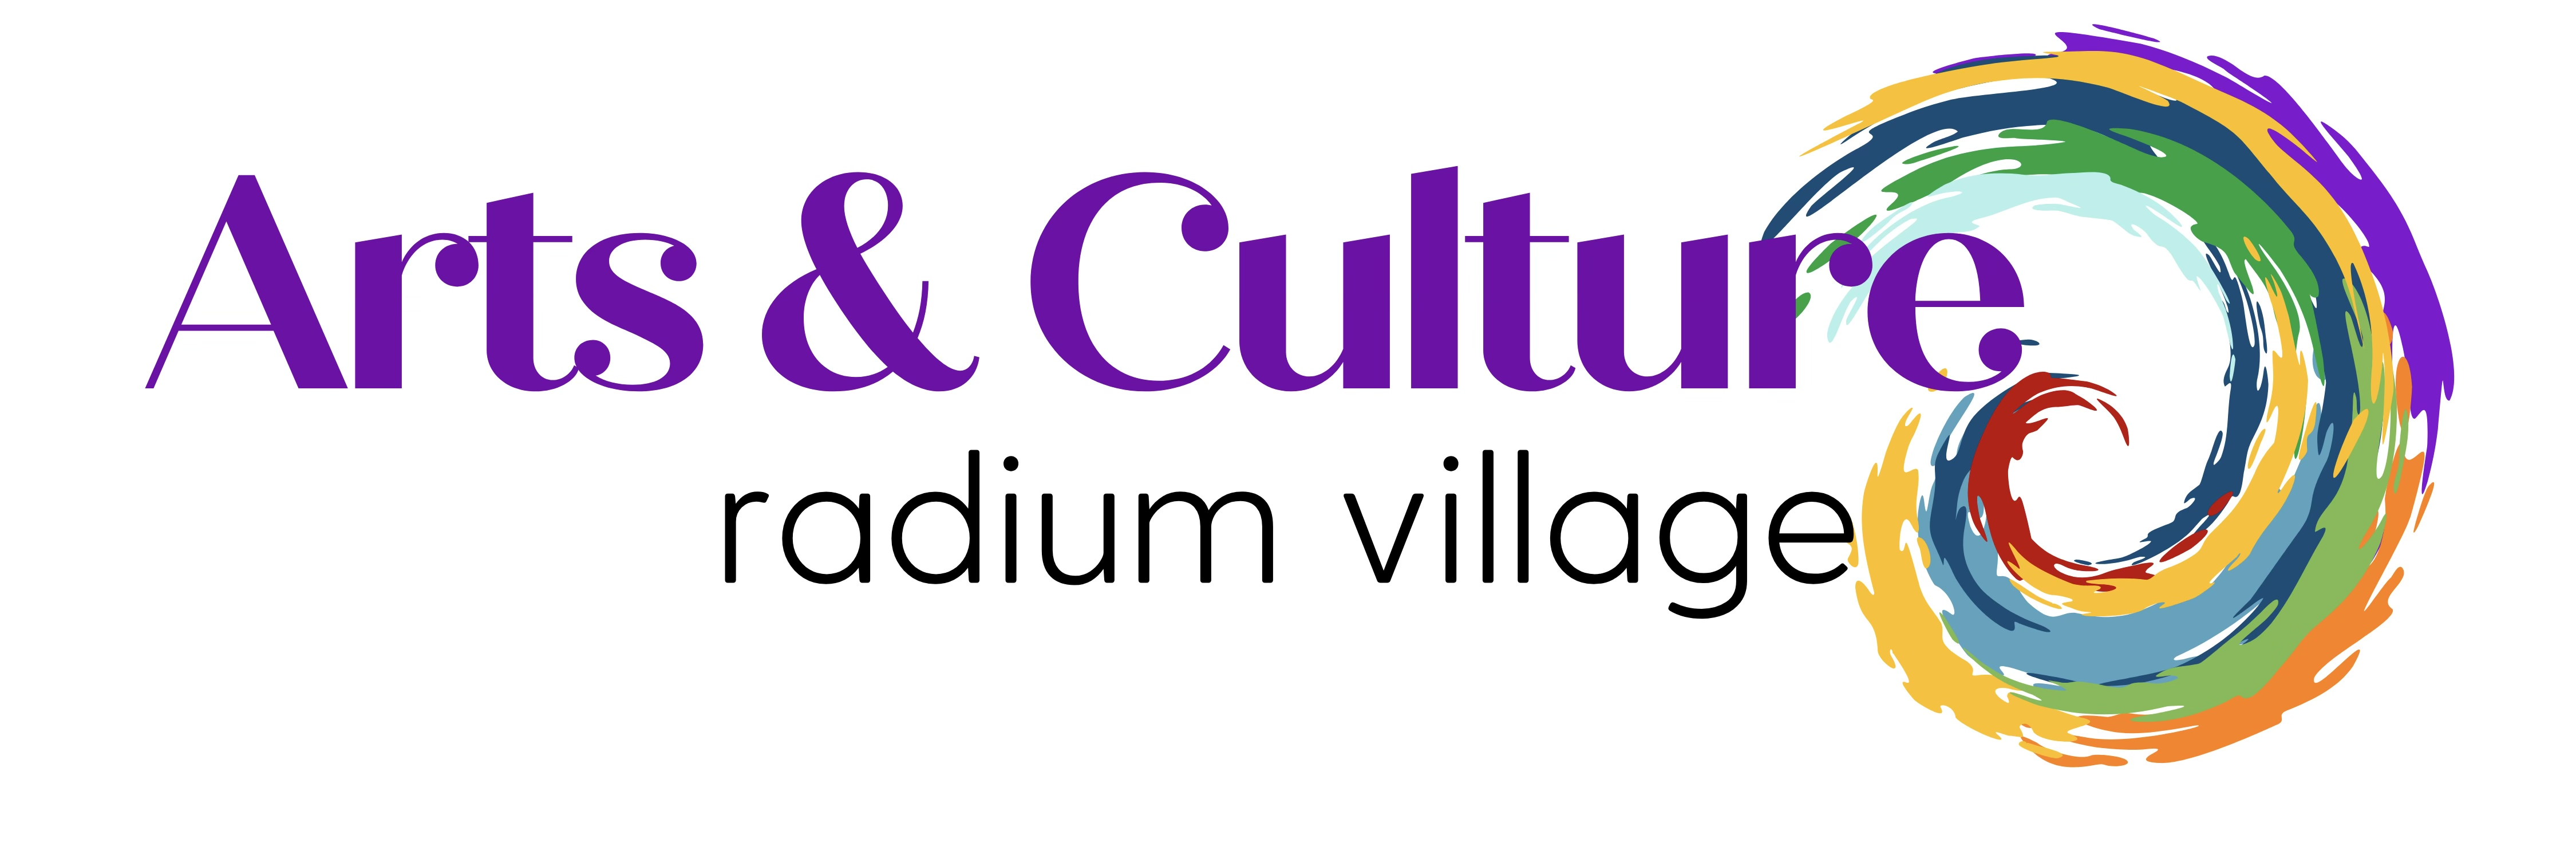 Radium Village Arts & Culture Society